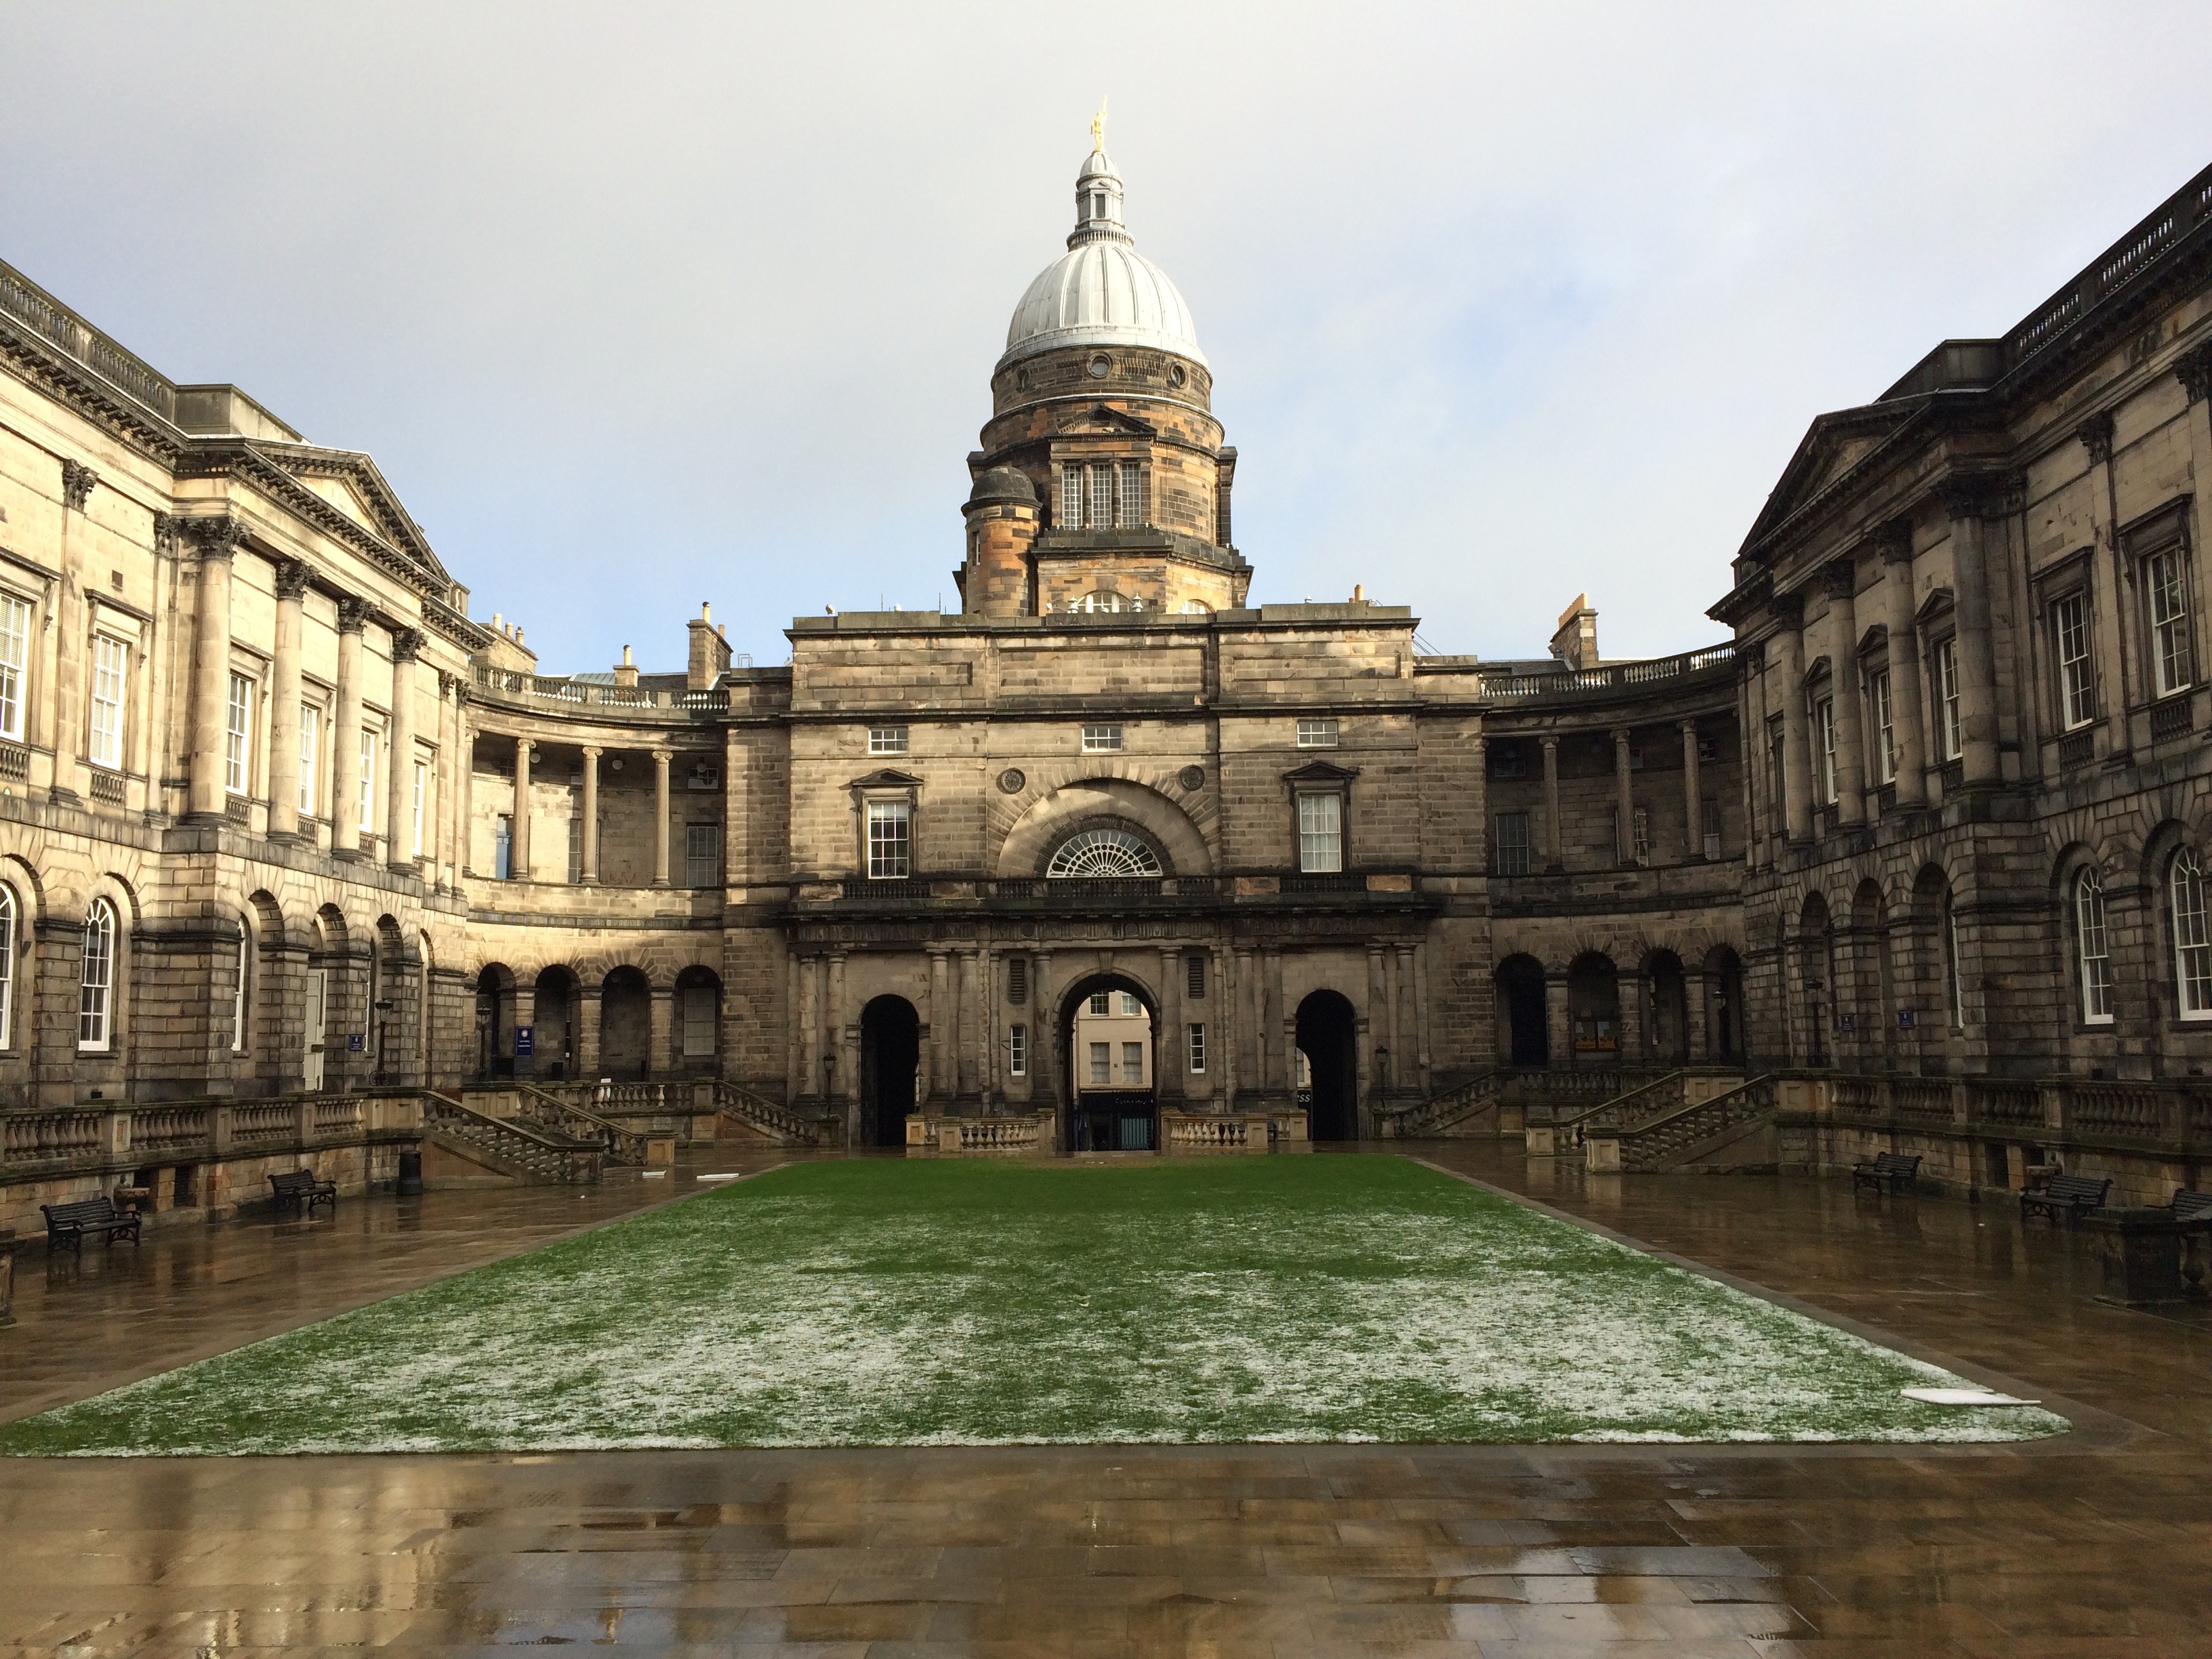 University of Edinburgh's old campus, after the rain